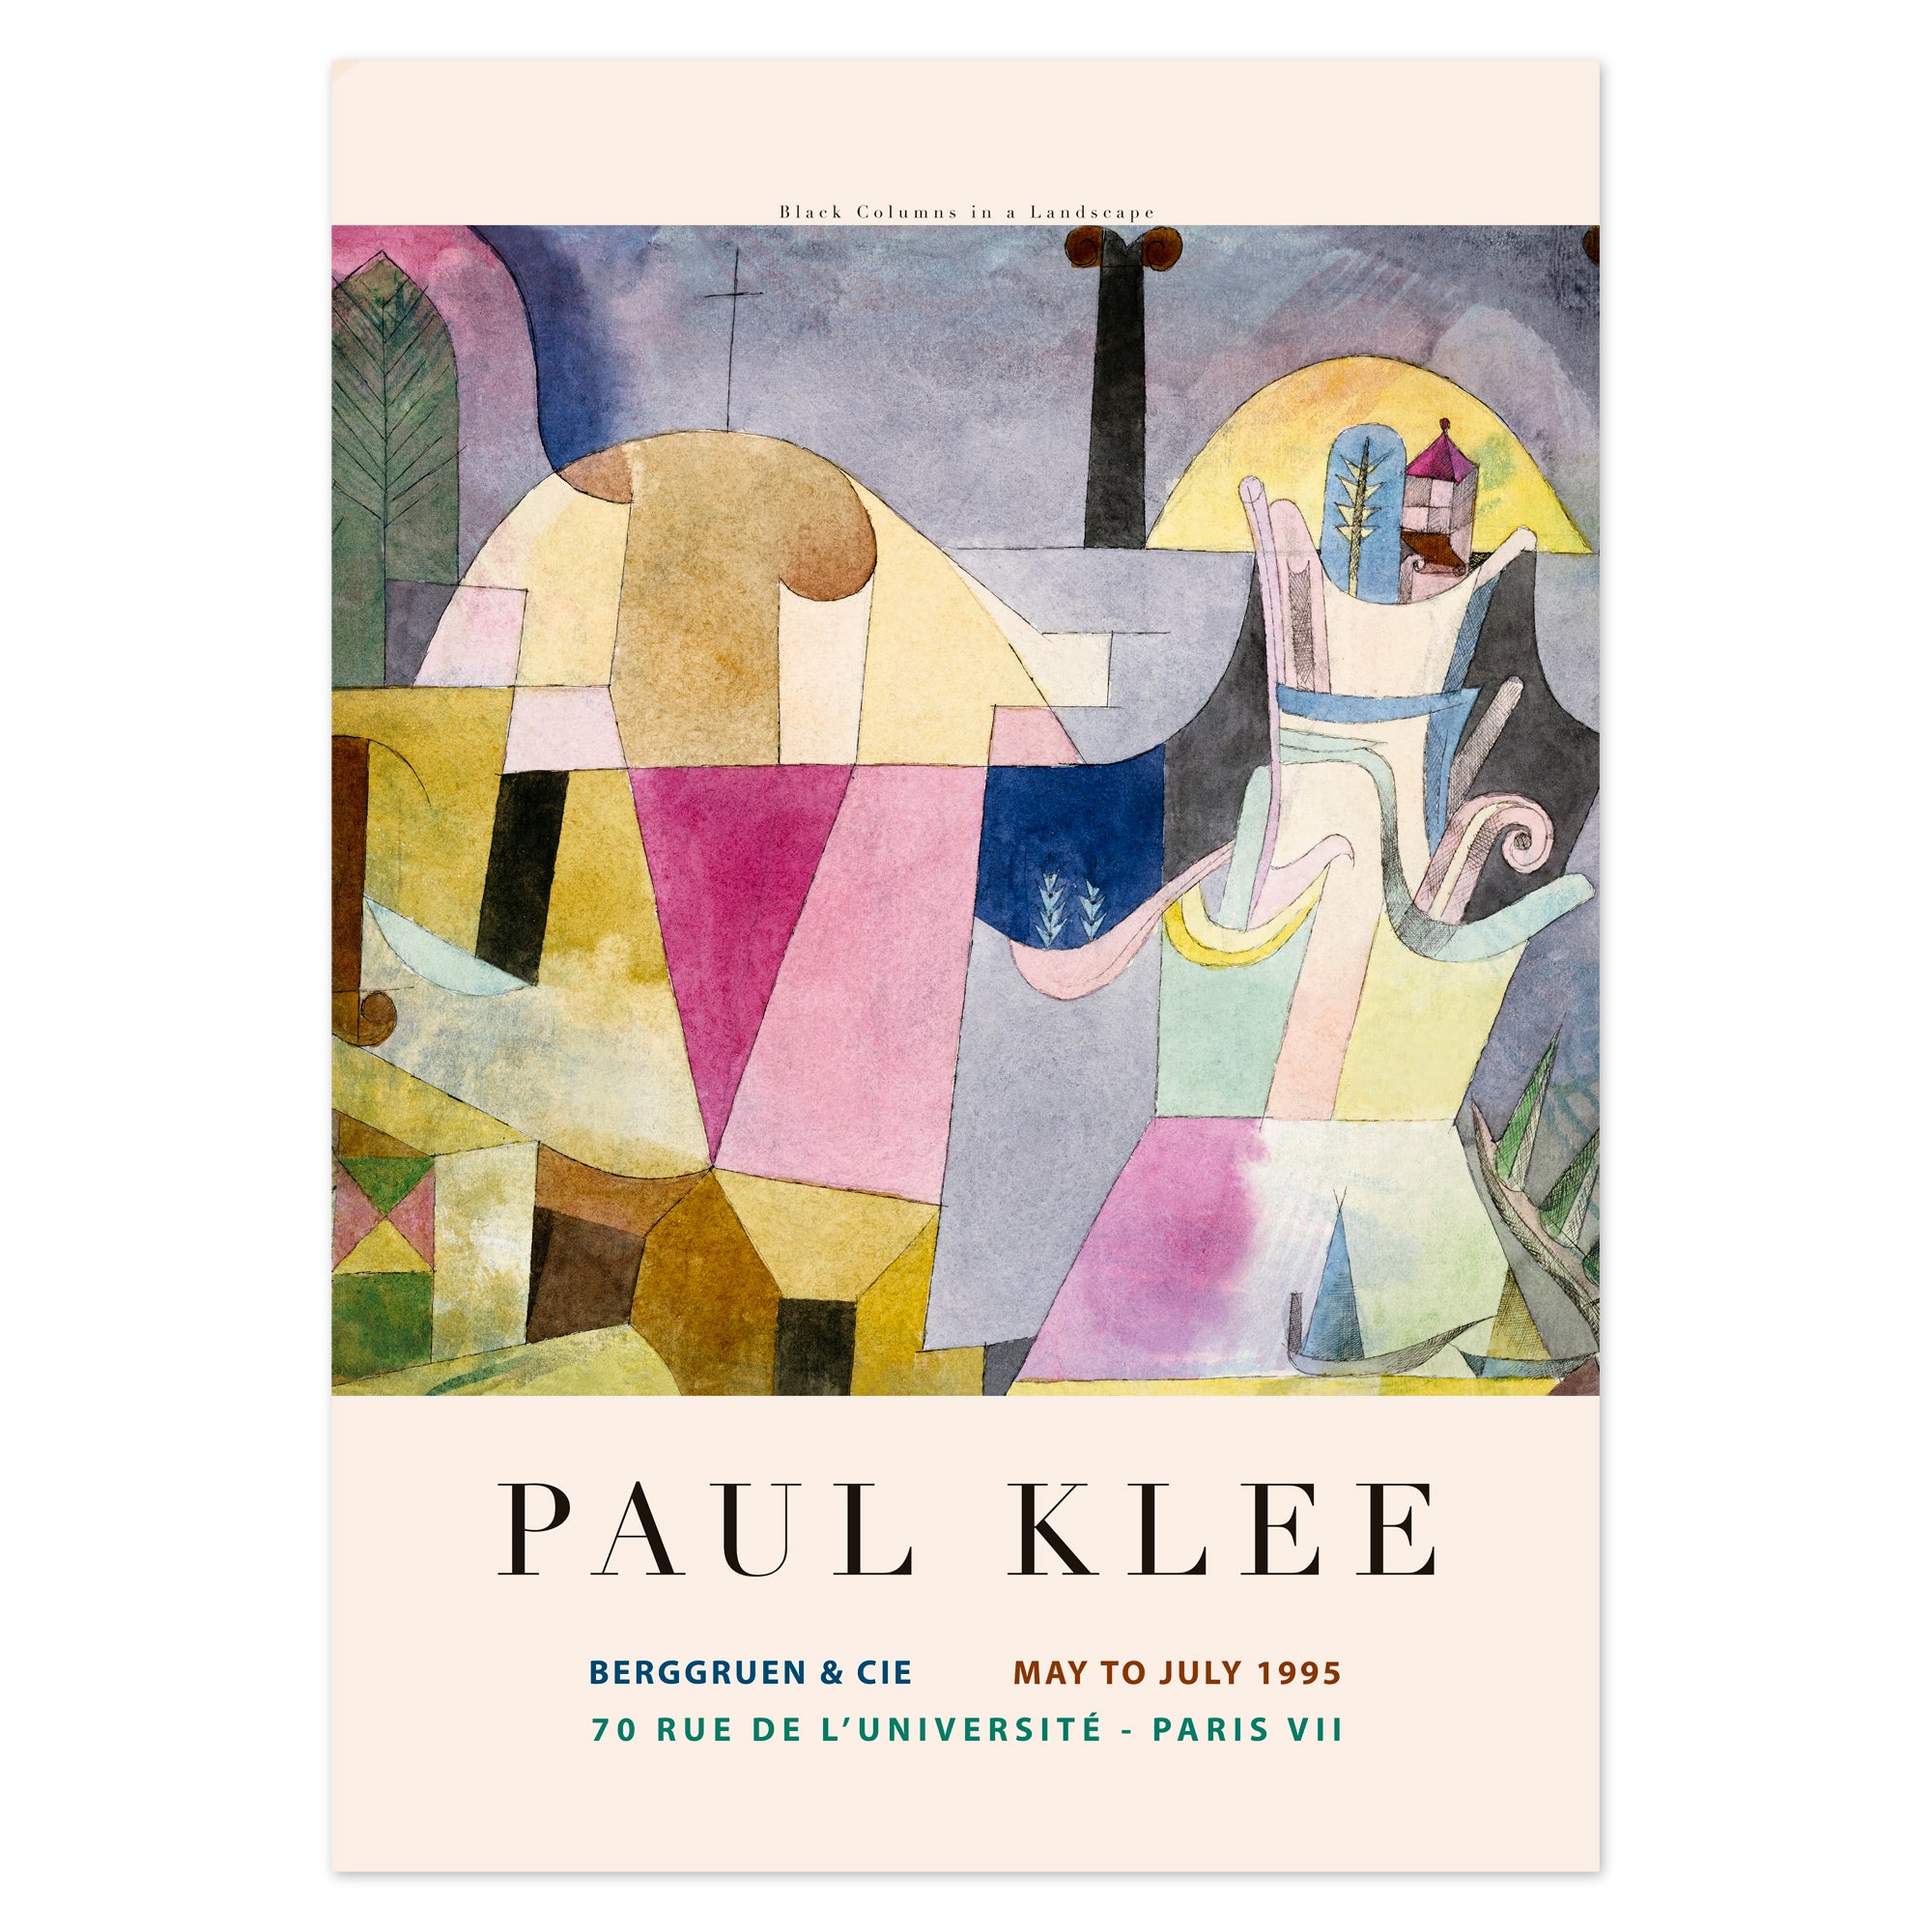 Paul Klee Poster - Black Columns in a Landscape